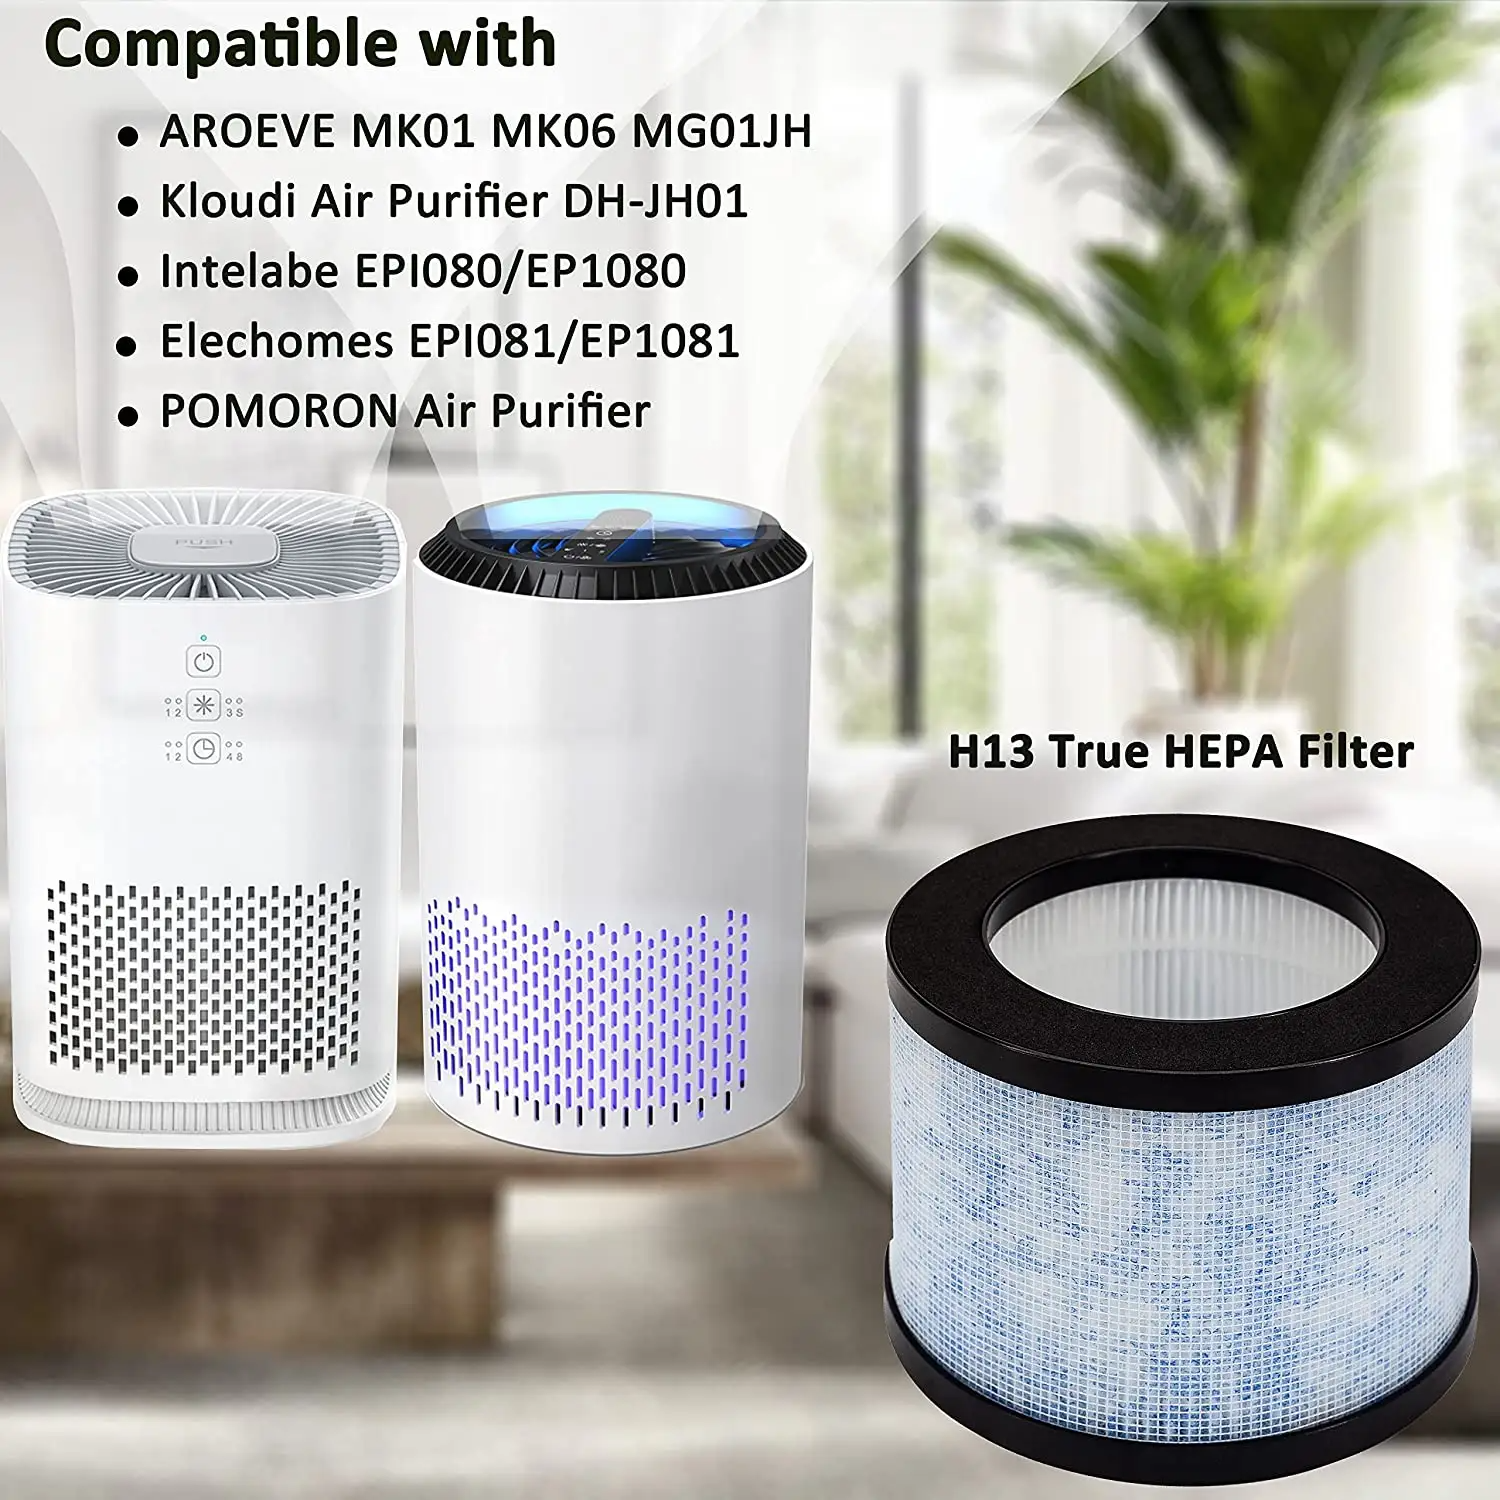 DH-JH01 H13 filtros HEPA compatibles con AROEVE MK01 MK06 MG01JH Elechomes EPI081 EP1081 Kloudi DH-JH01 POMORON piezas de purificador de aire